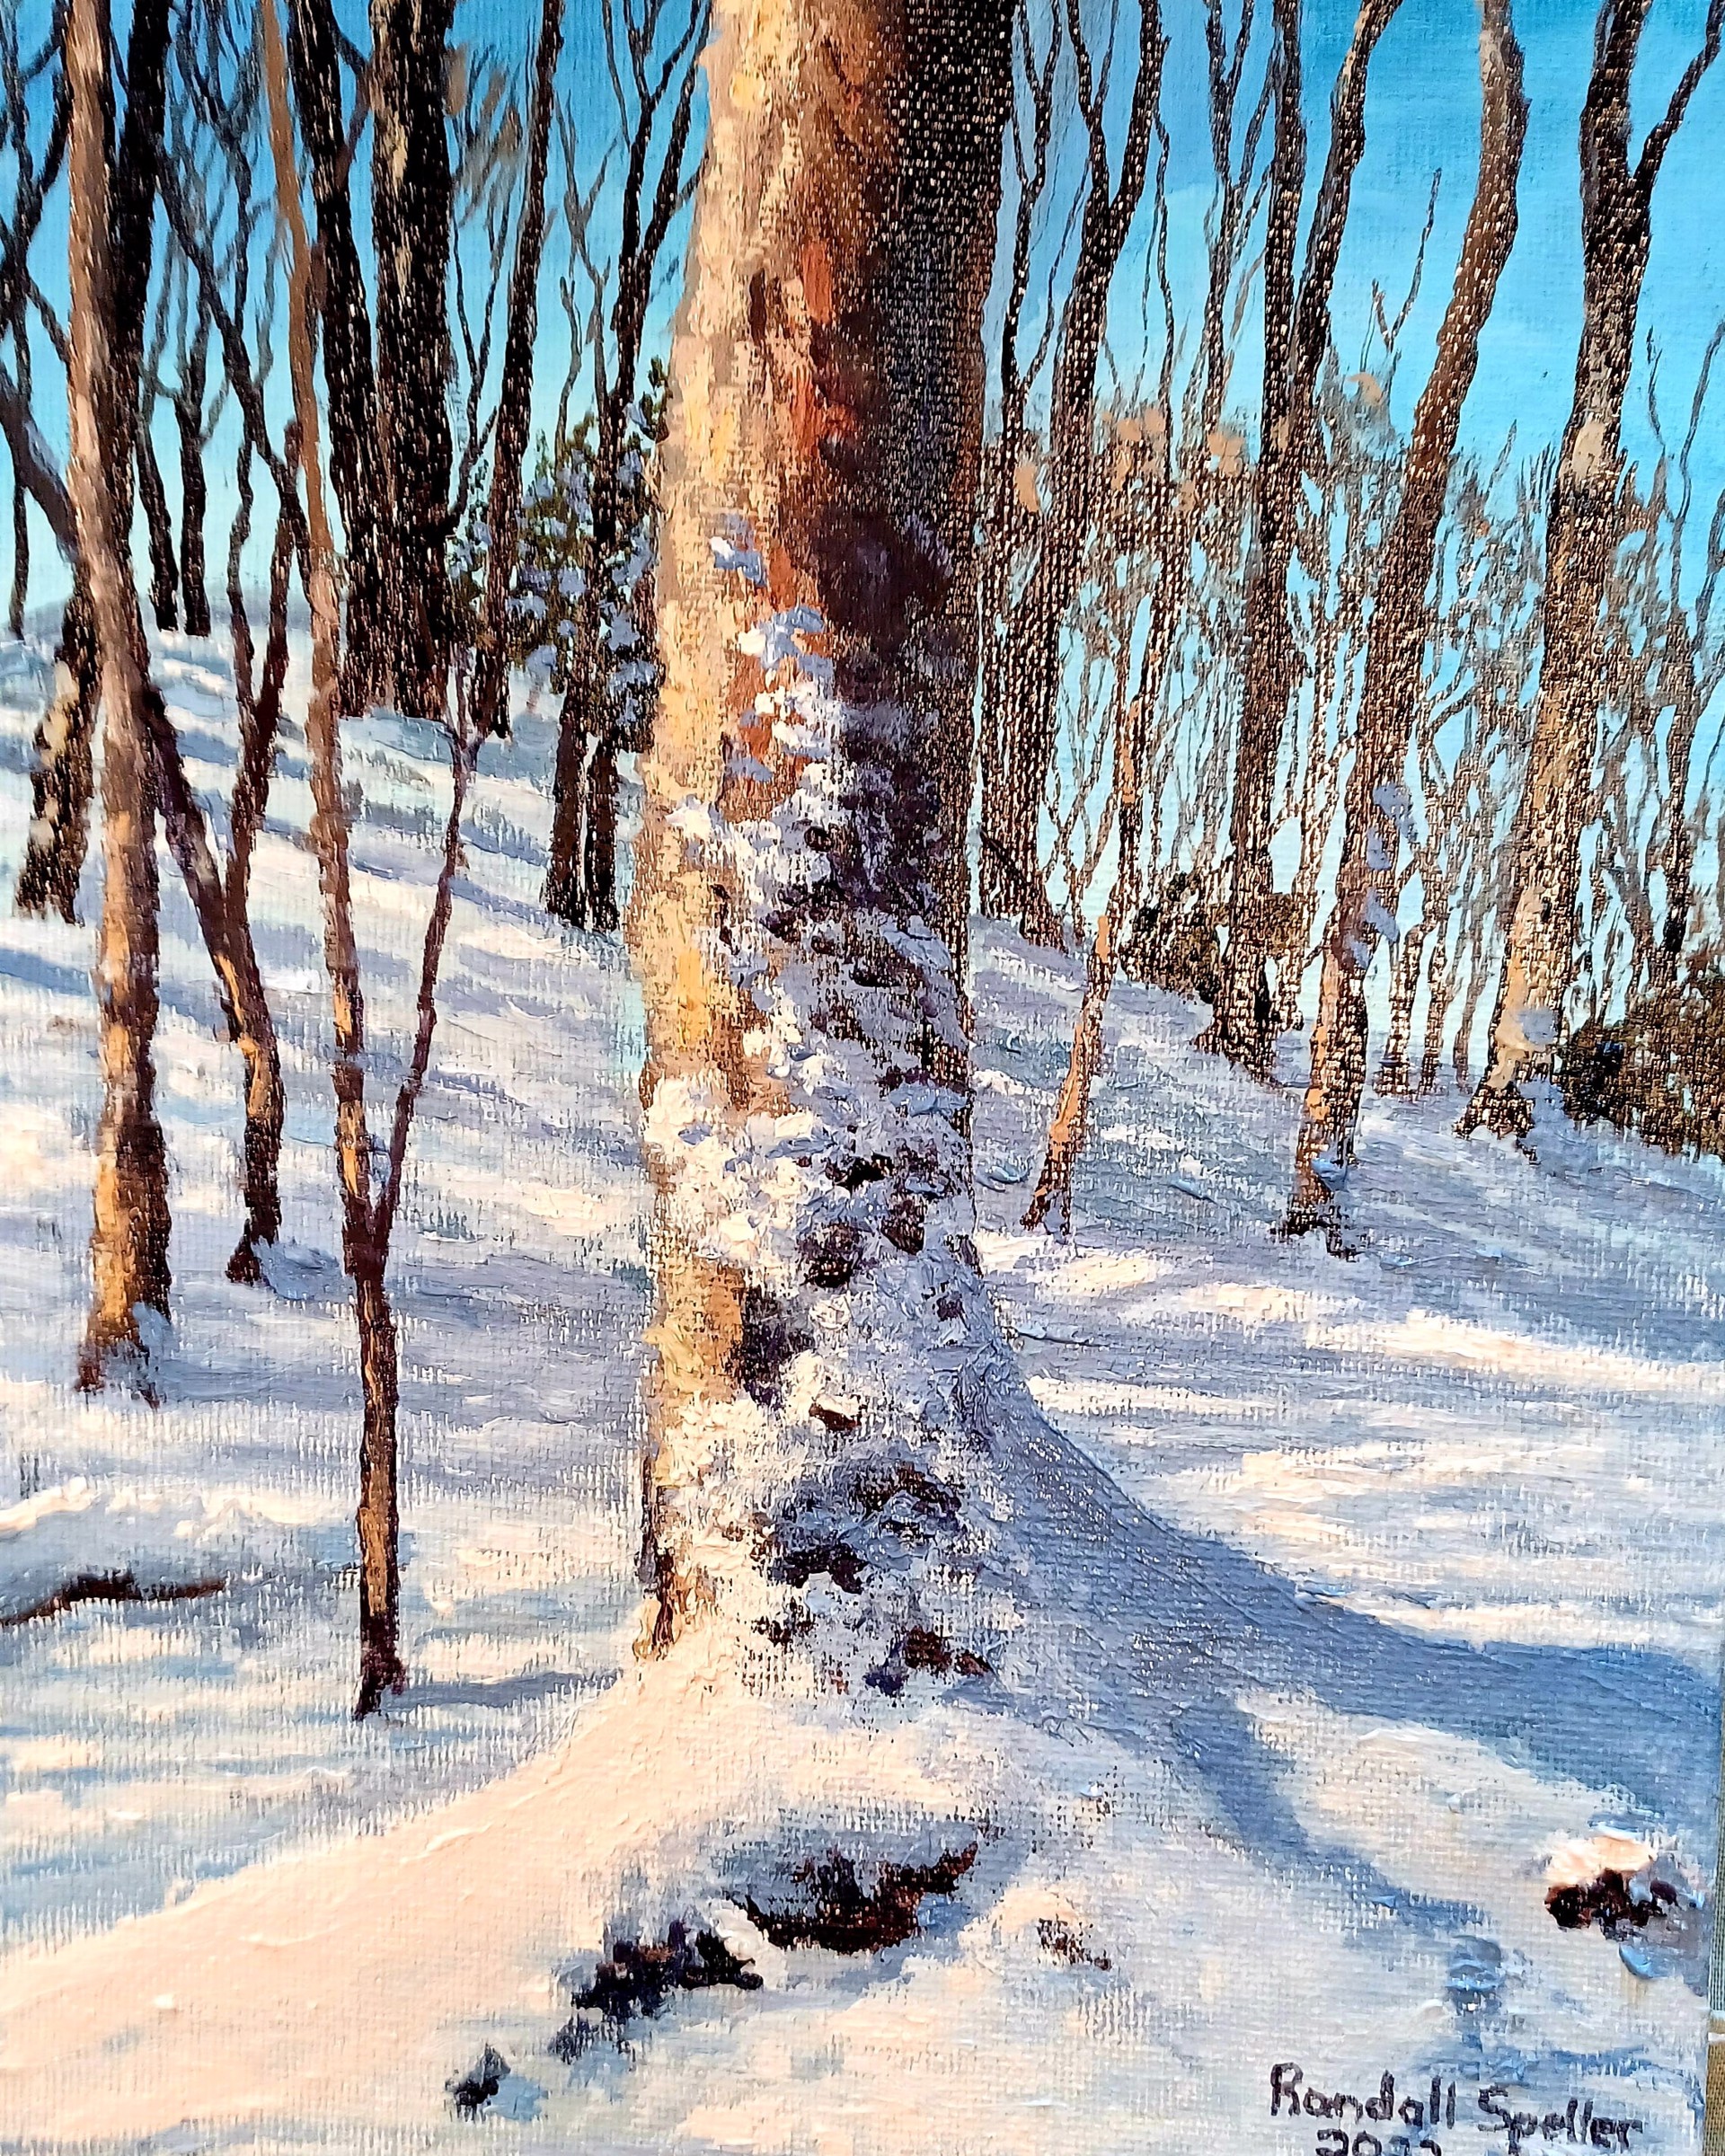 Winter Roots by Randall Speller